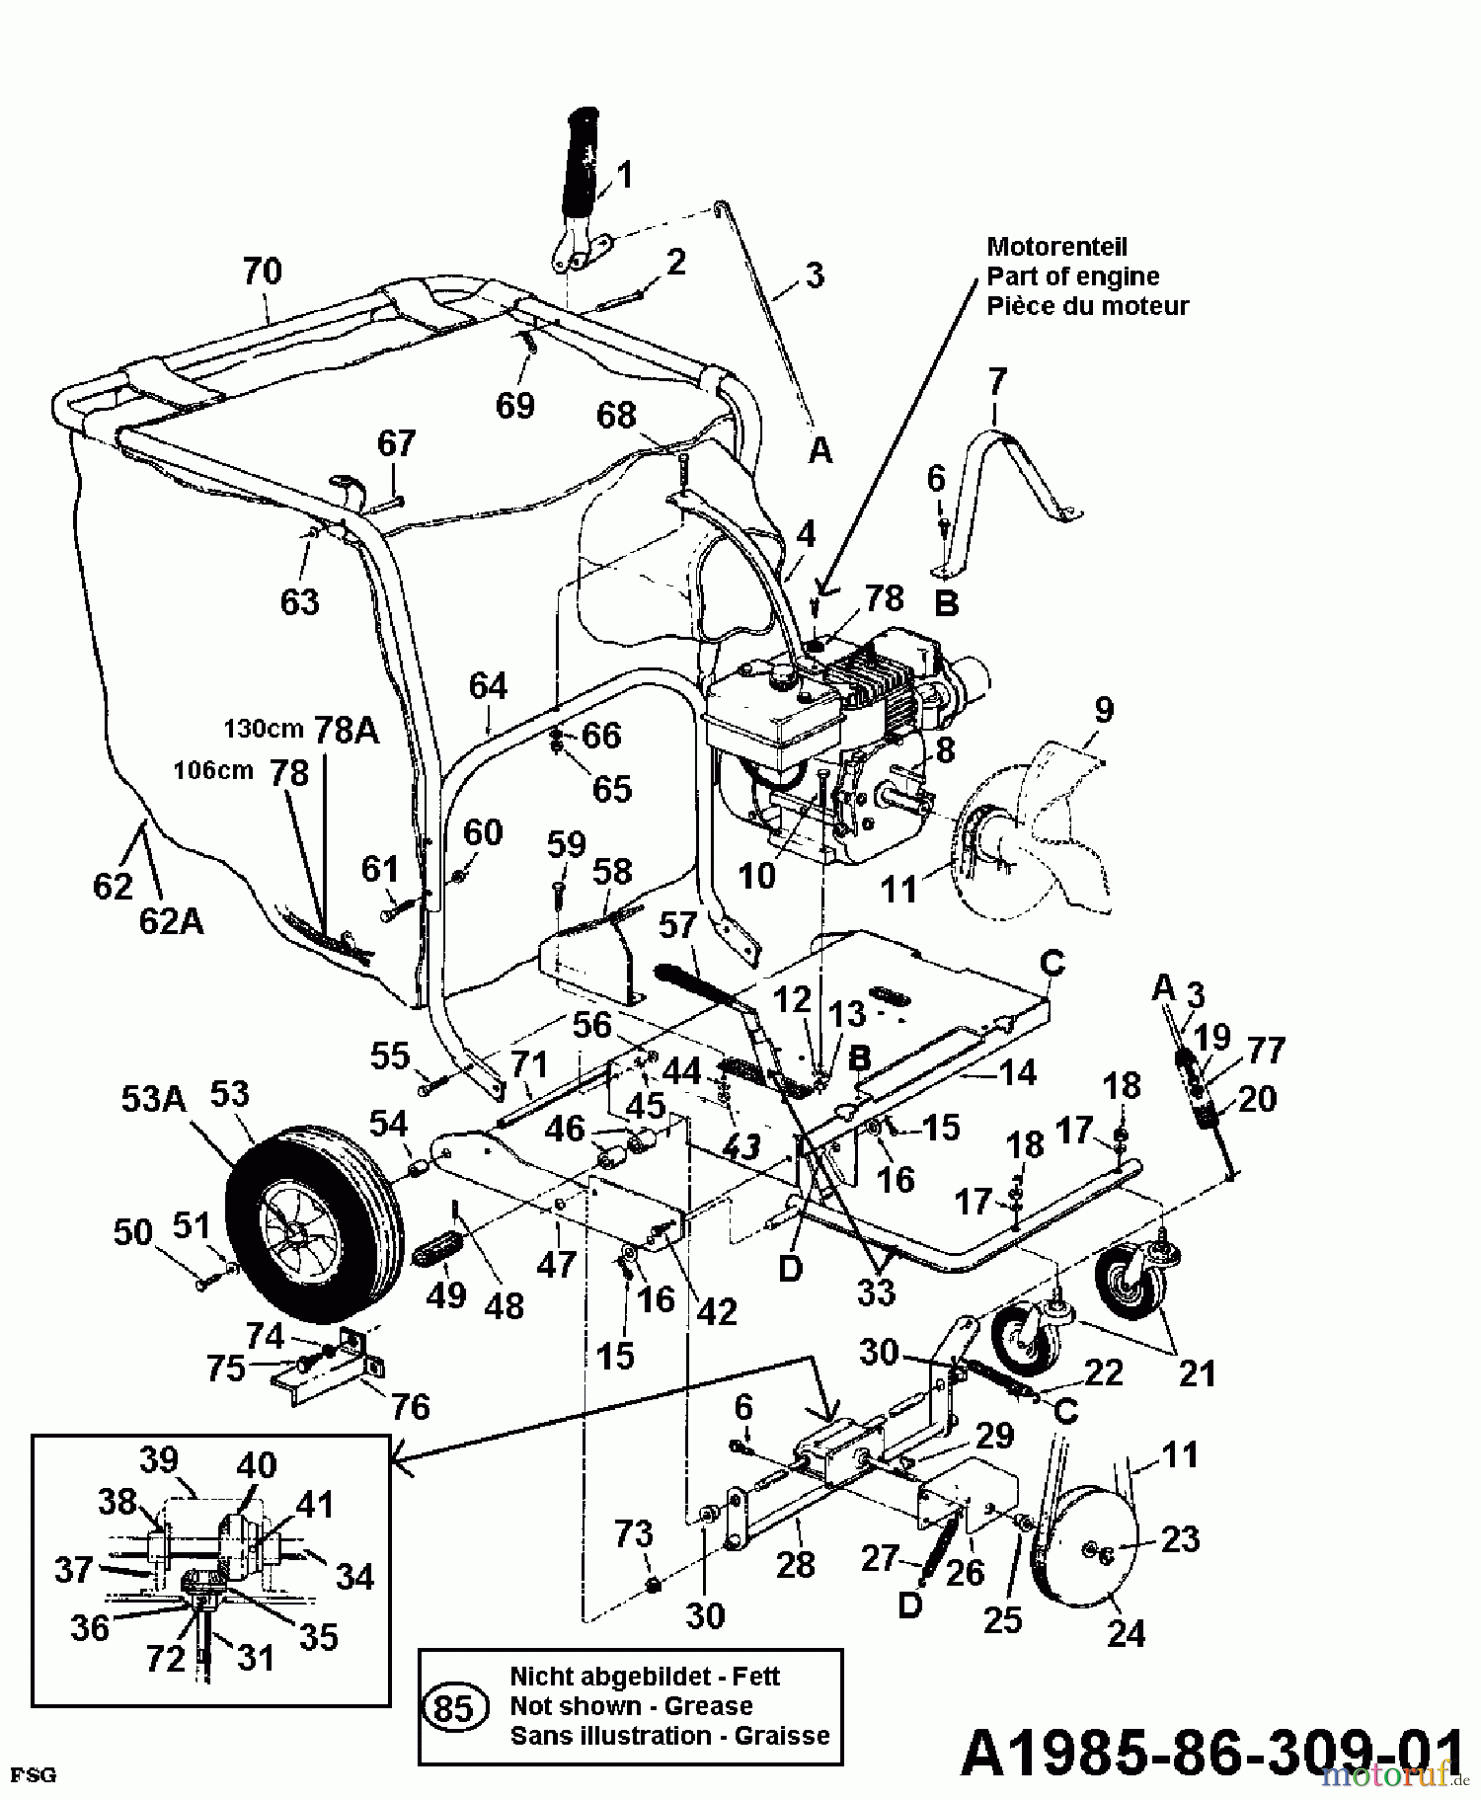  MTD Leaf blower, Blower vac Vacu-Jet-Star 245-6850  (1985) Basic machine